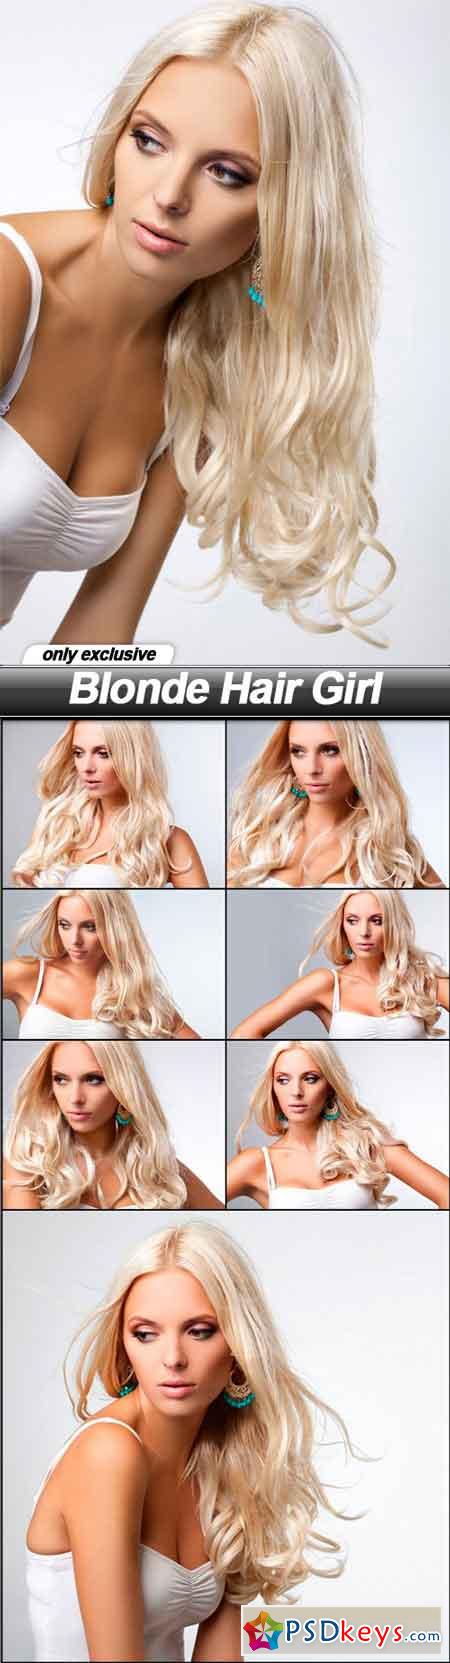 Blonde Hair Girl - 8 UHQ JPEG